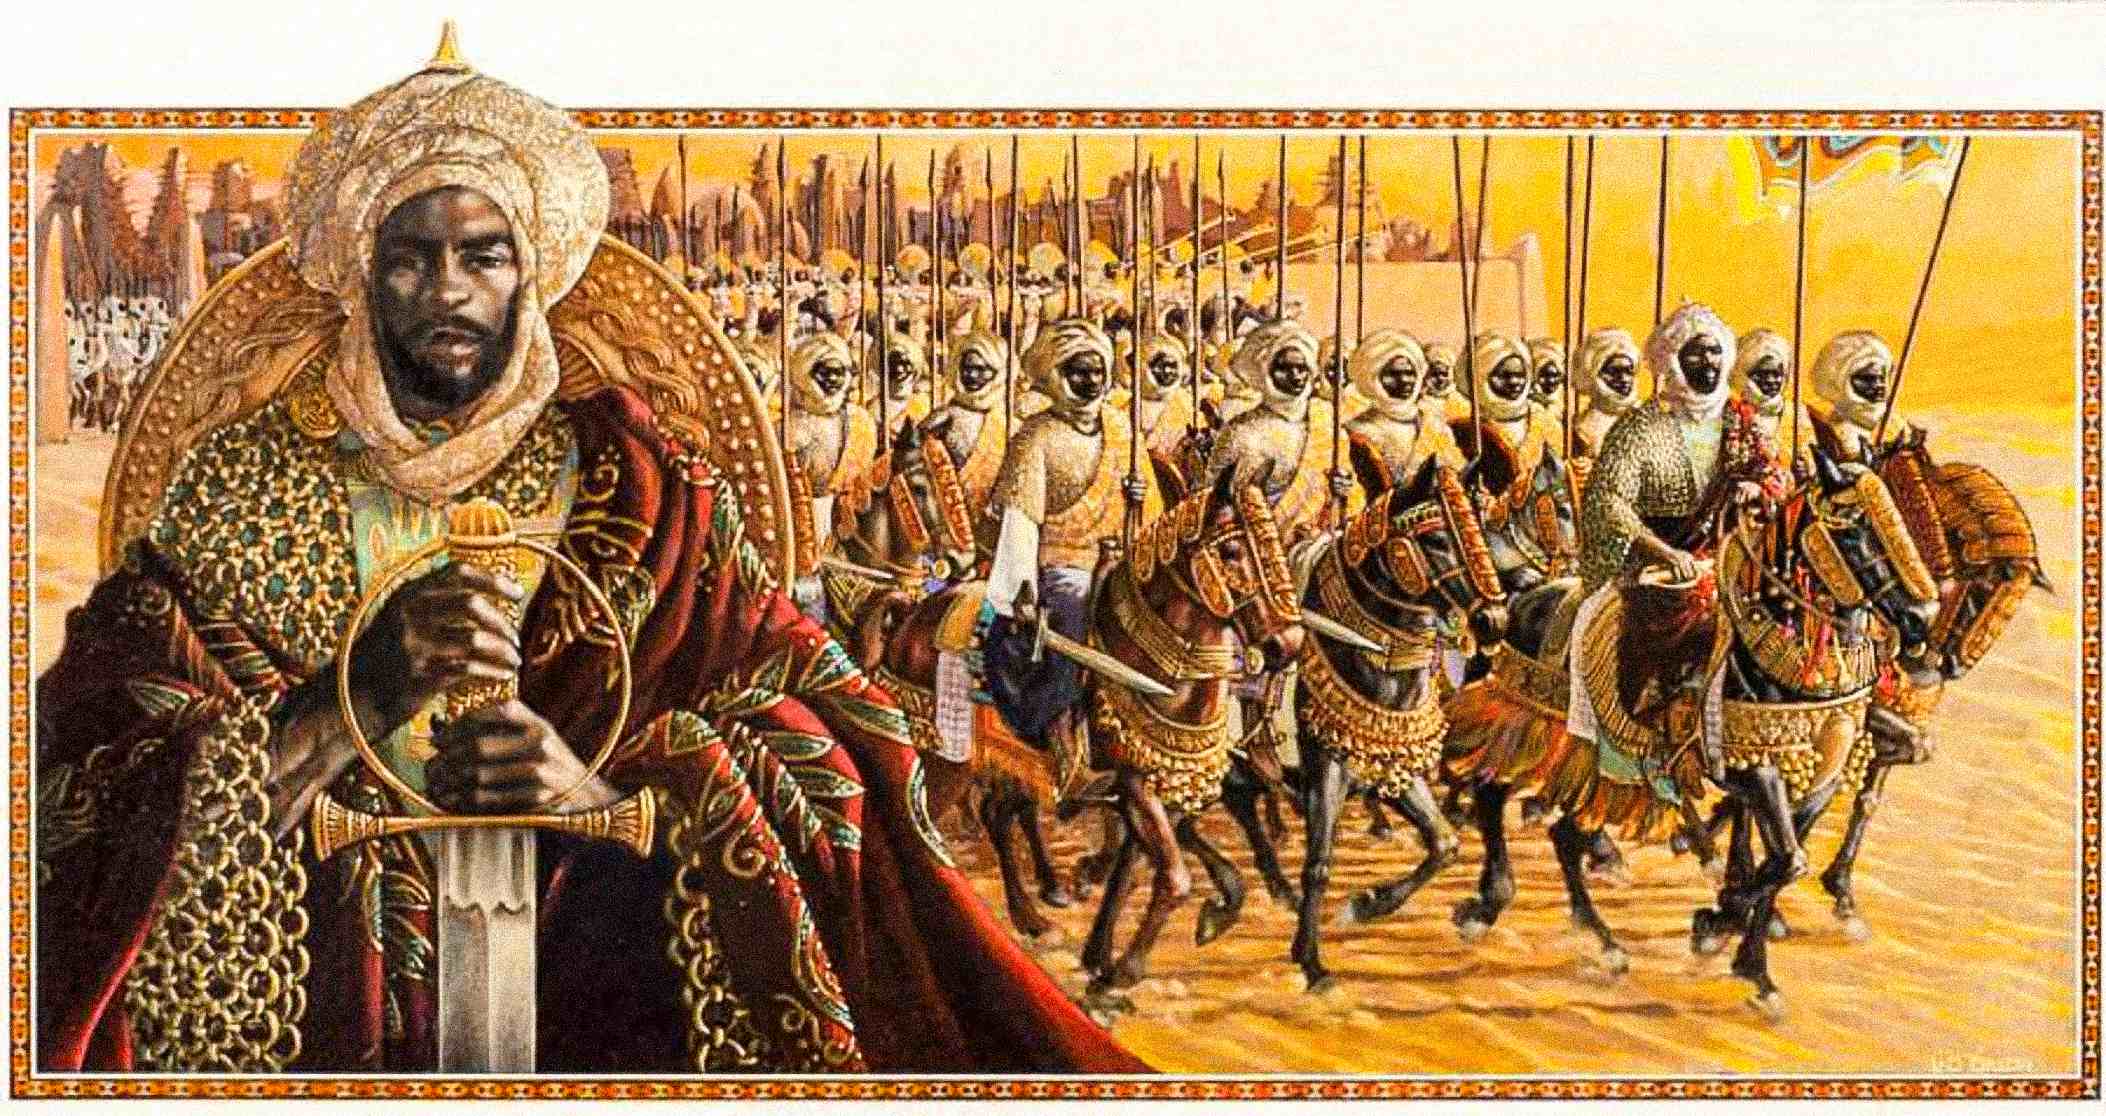 Artistic representation of the Empire of Mansa Musa